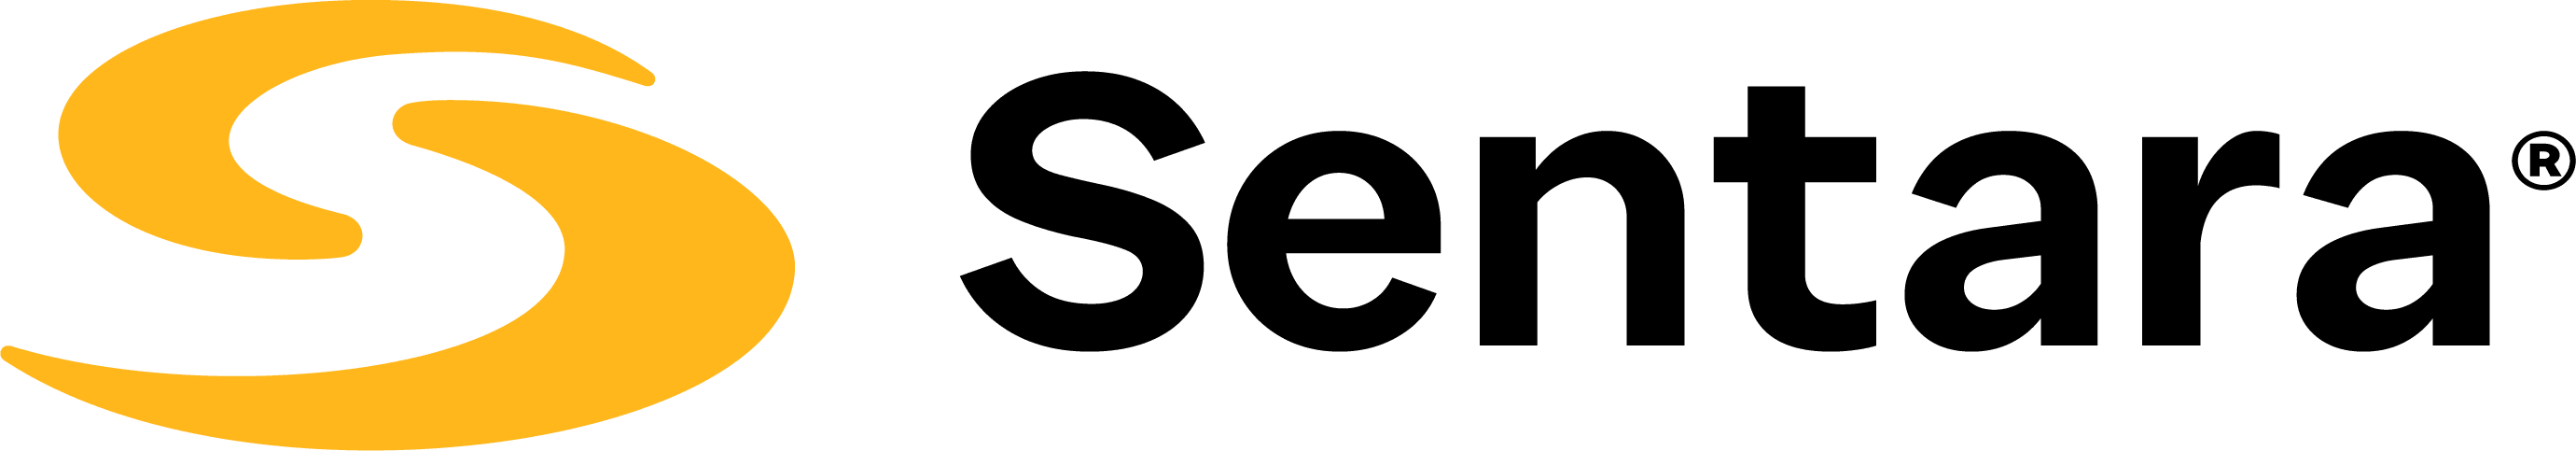 Sentara Health logo - Home